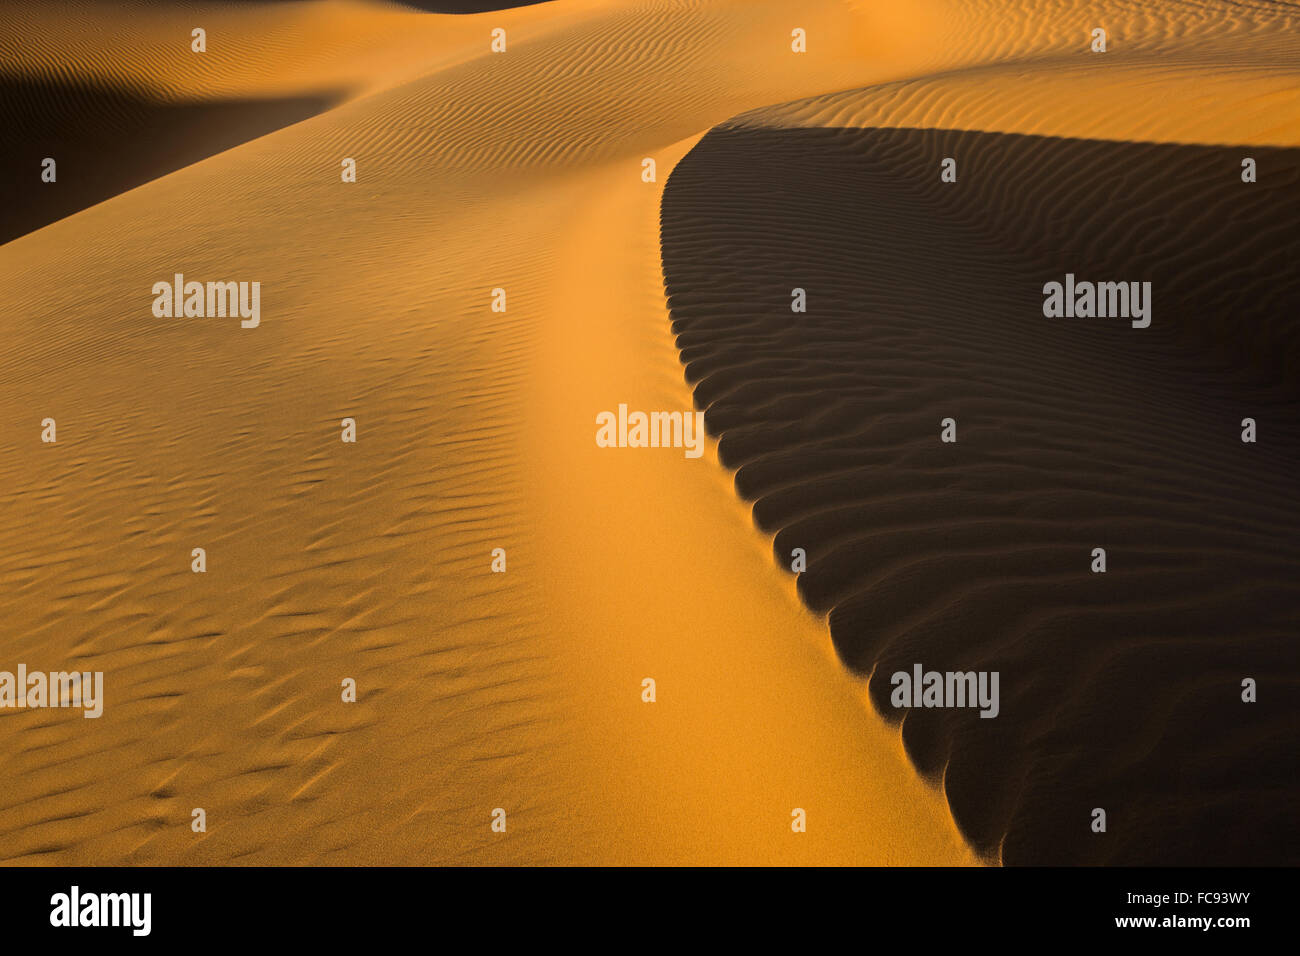 Sand dune crest, light and shadow, Rub' al Khali or Empty Quarter, United Arab Emirates Stock Photo